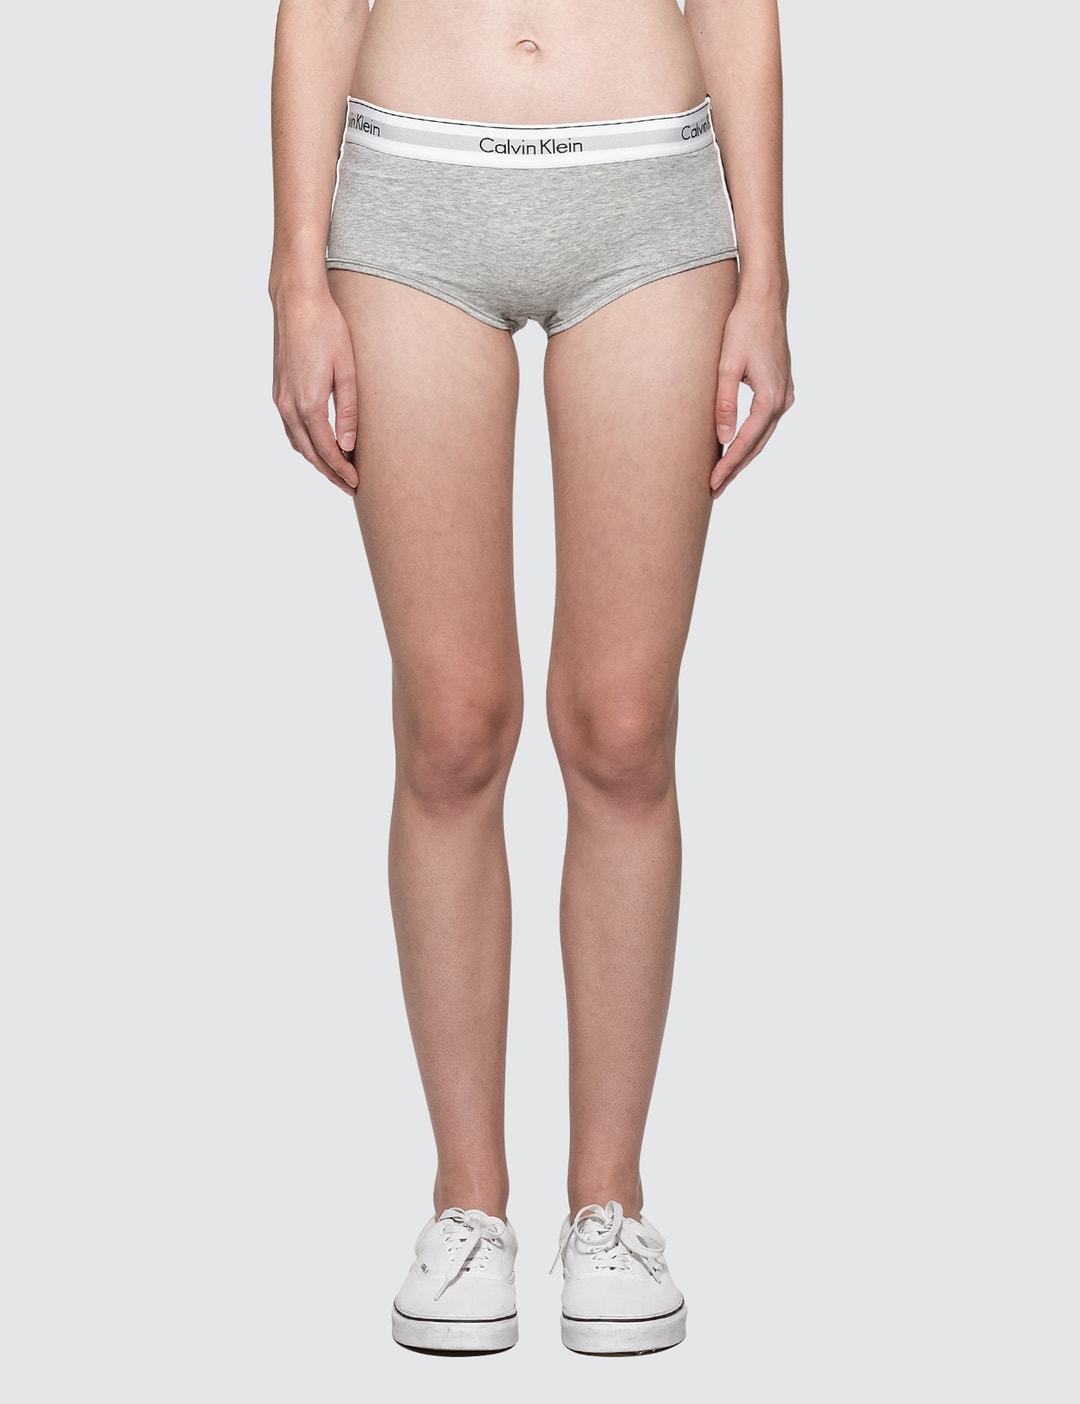 Boy Shorts - Modern Cotton Calvin Klein®